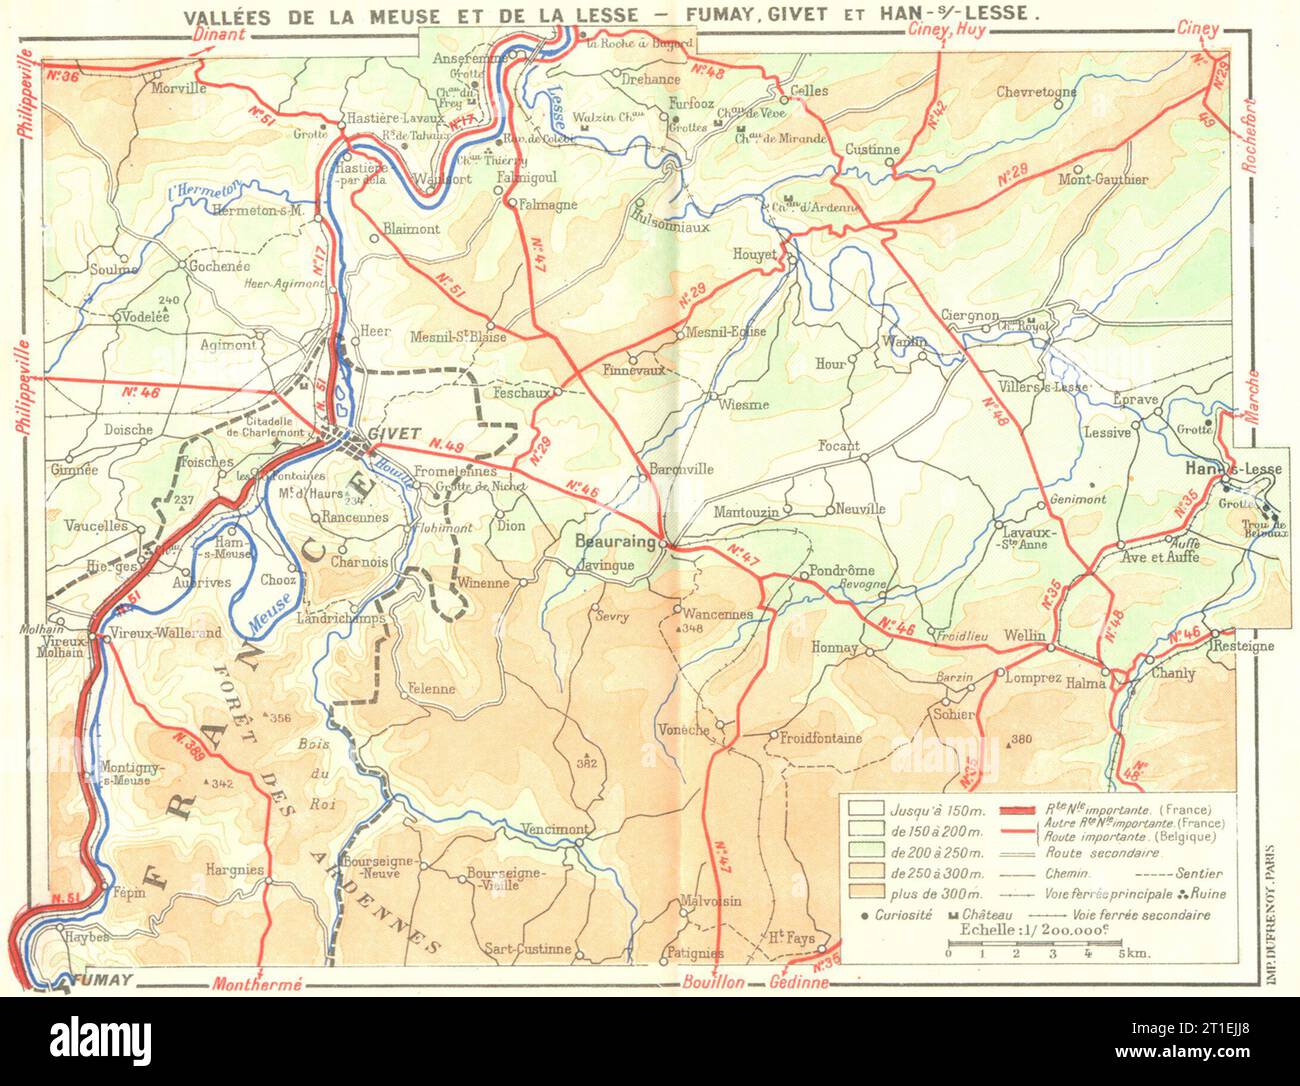 MEUSE. Vallees de lesse-Fumay, Givet Han-S 1953 vecchia mappa d'epoca Foto Stock